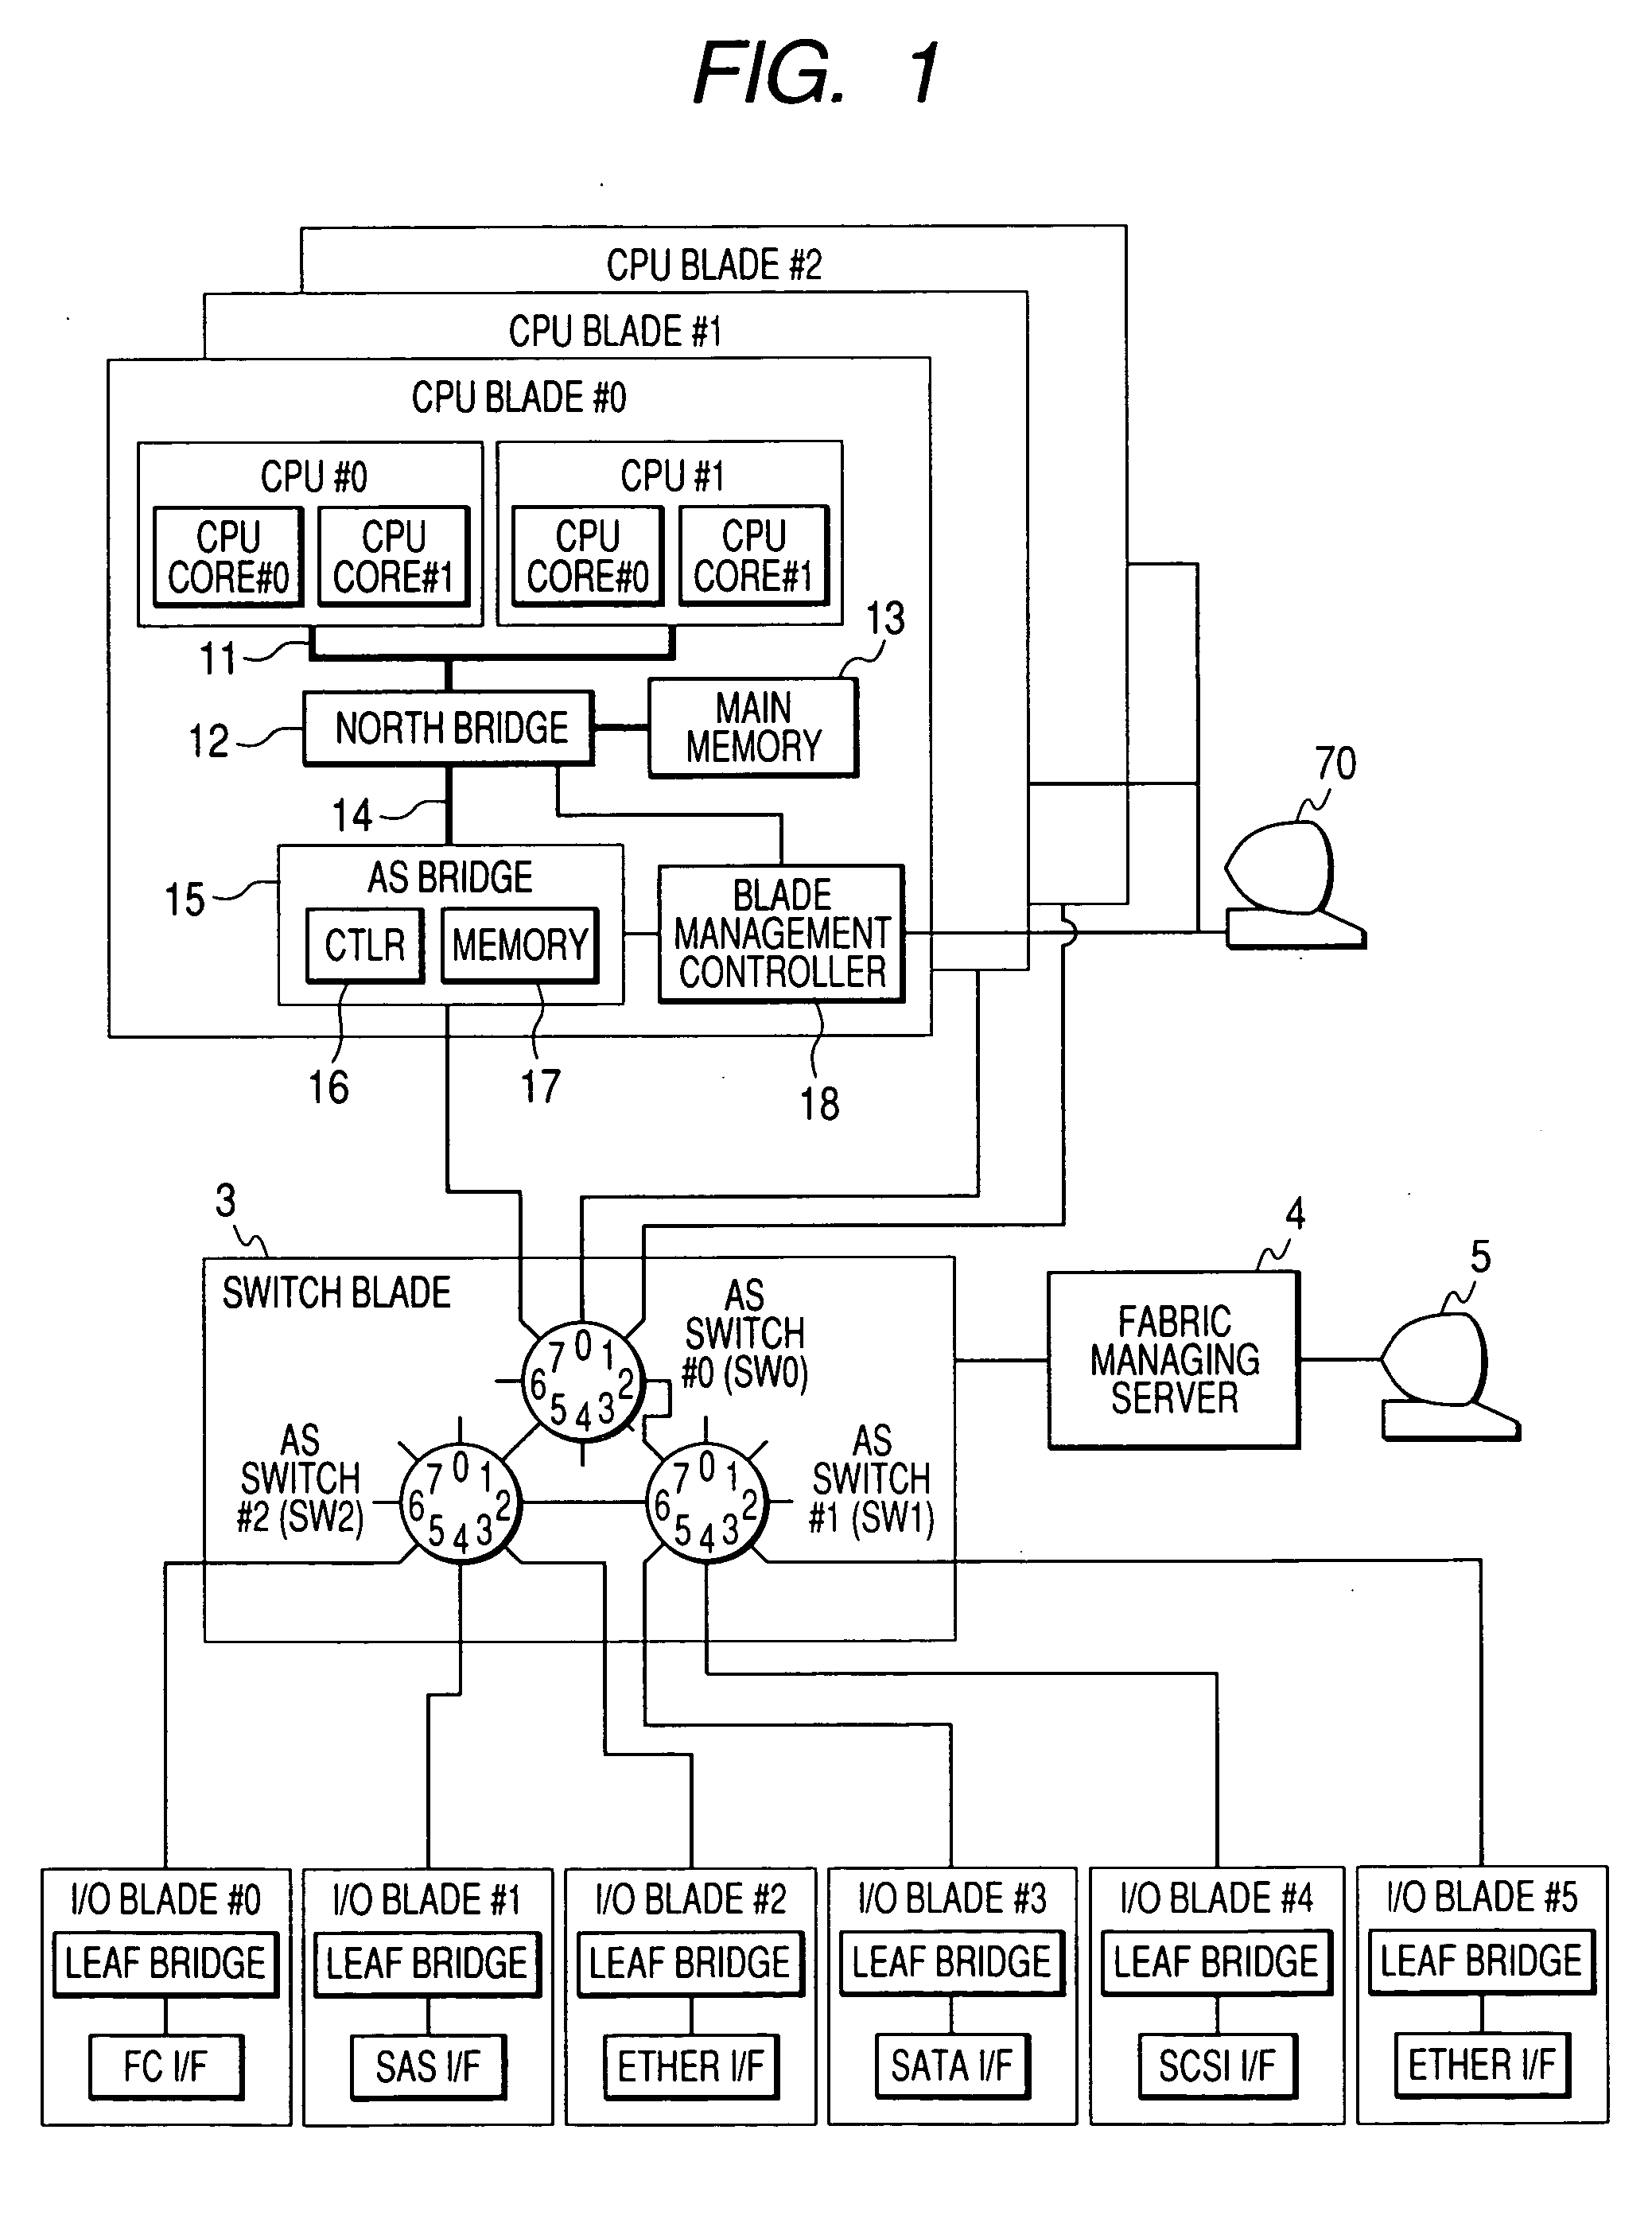 Computer system and I/O bridge